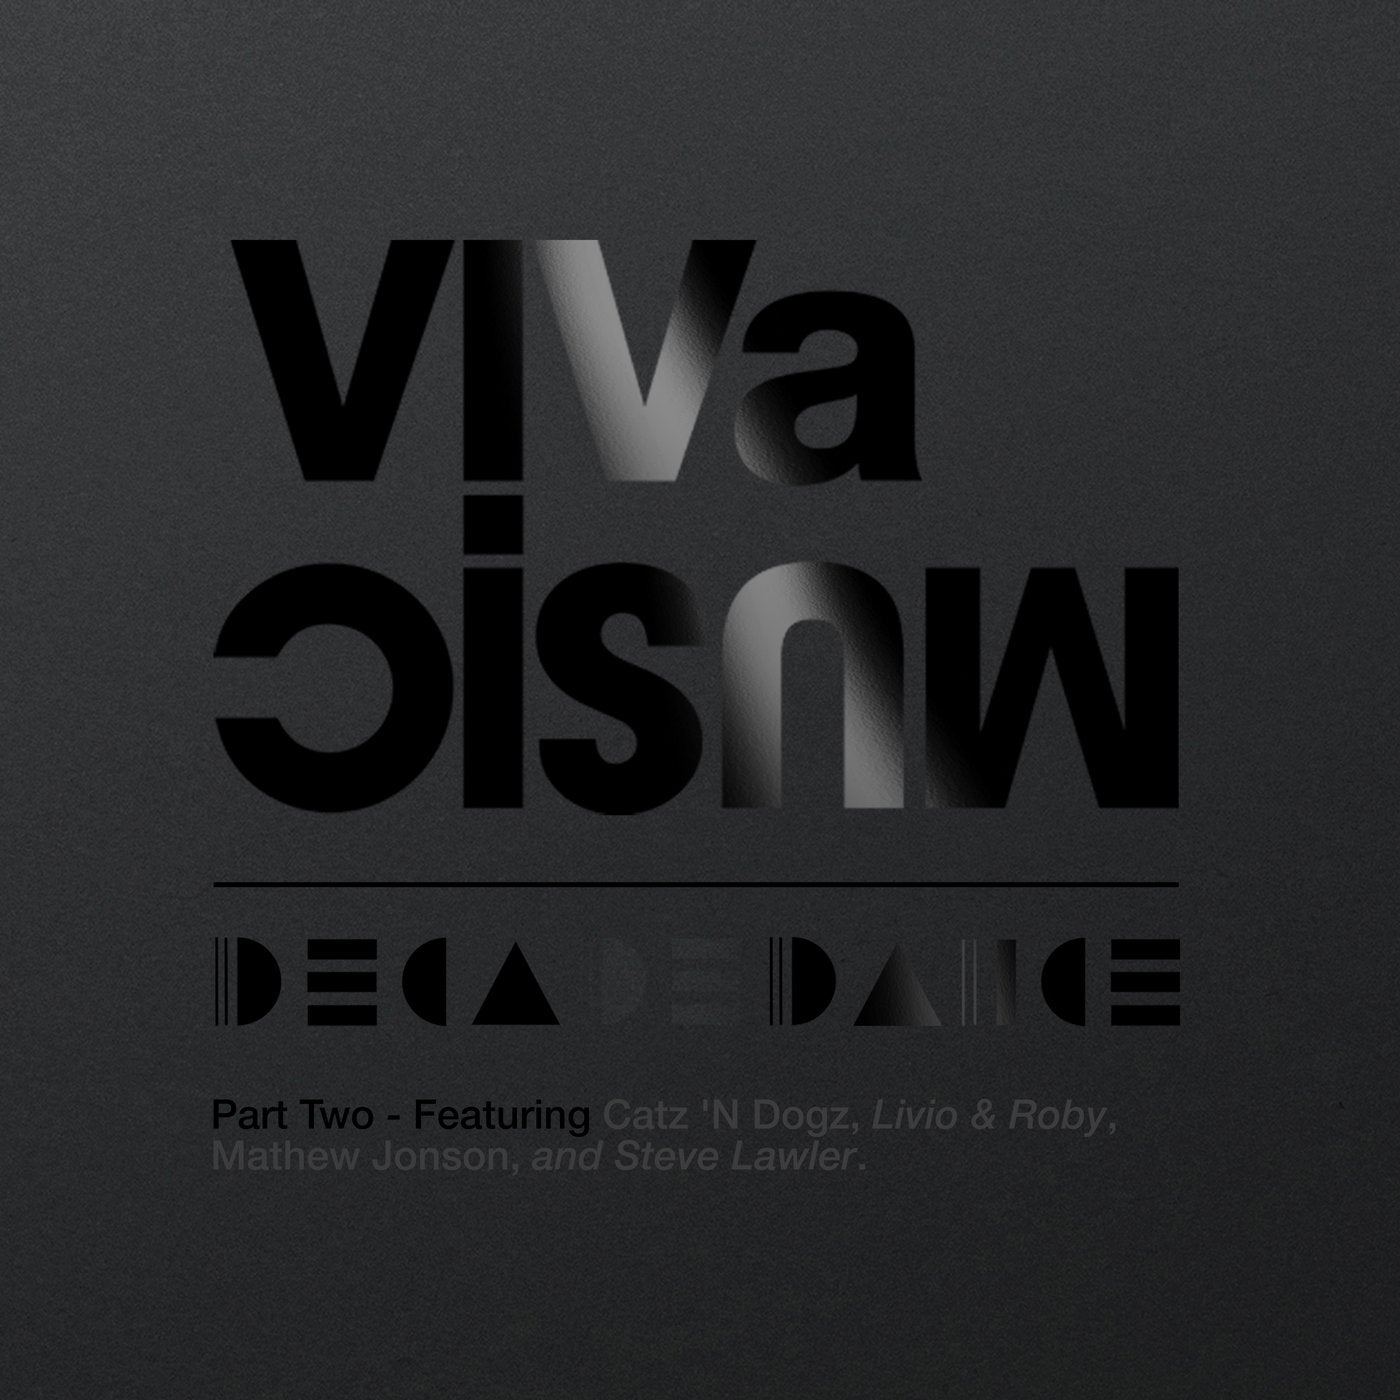 10 Years of VIVa MUSiC: Decadedance Part Two